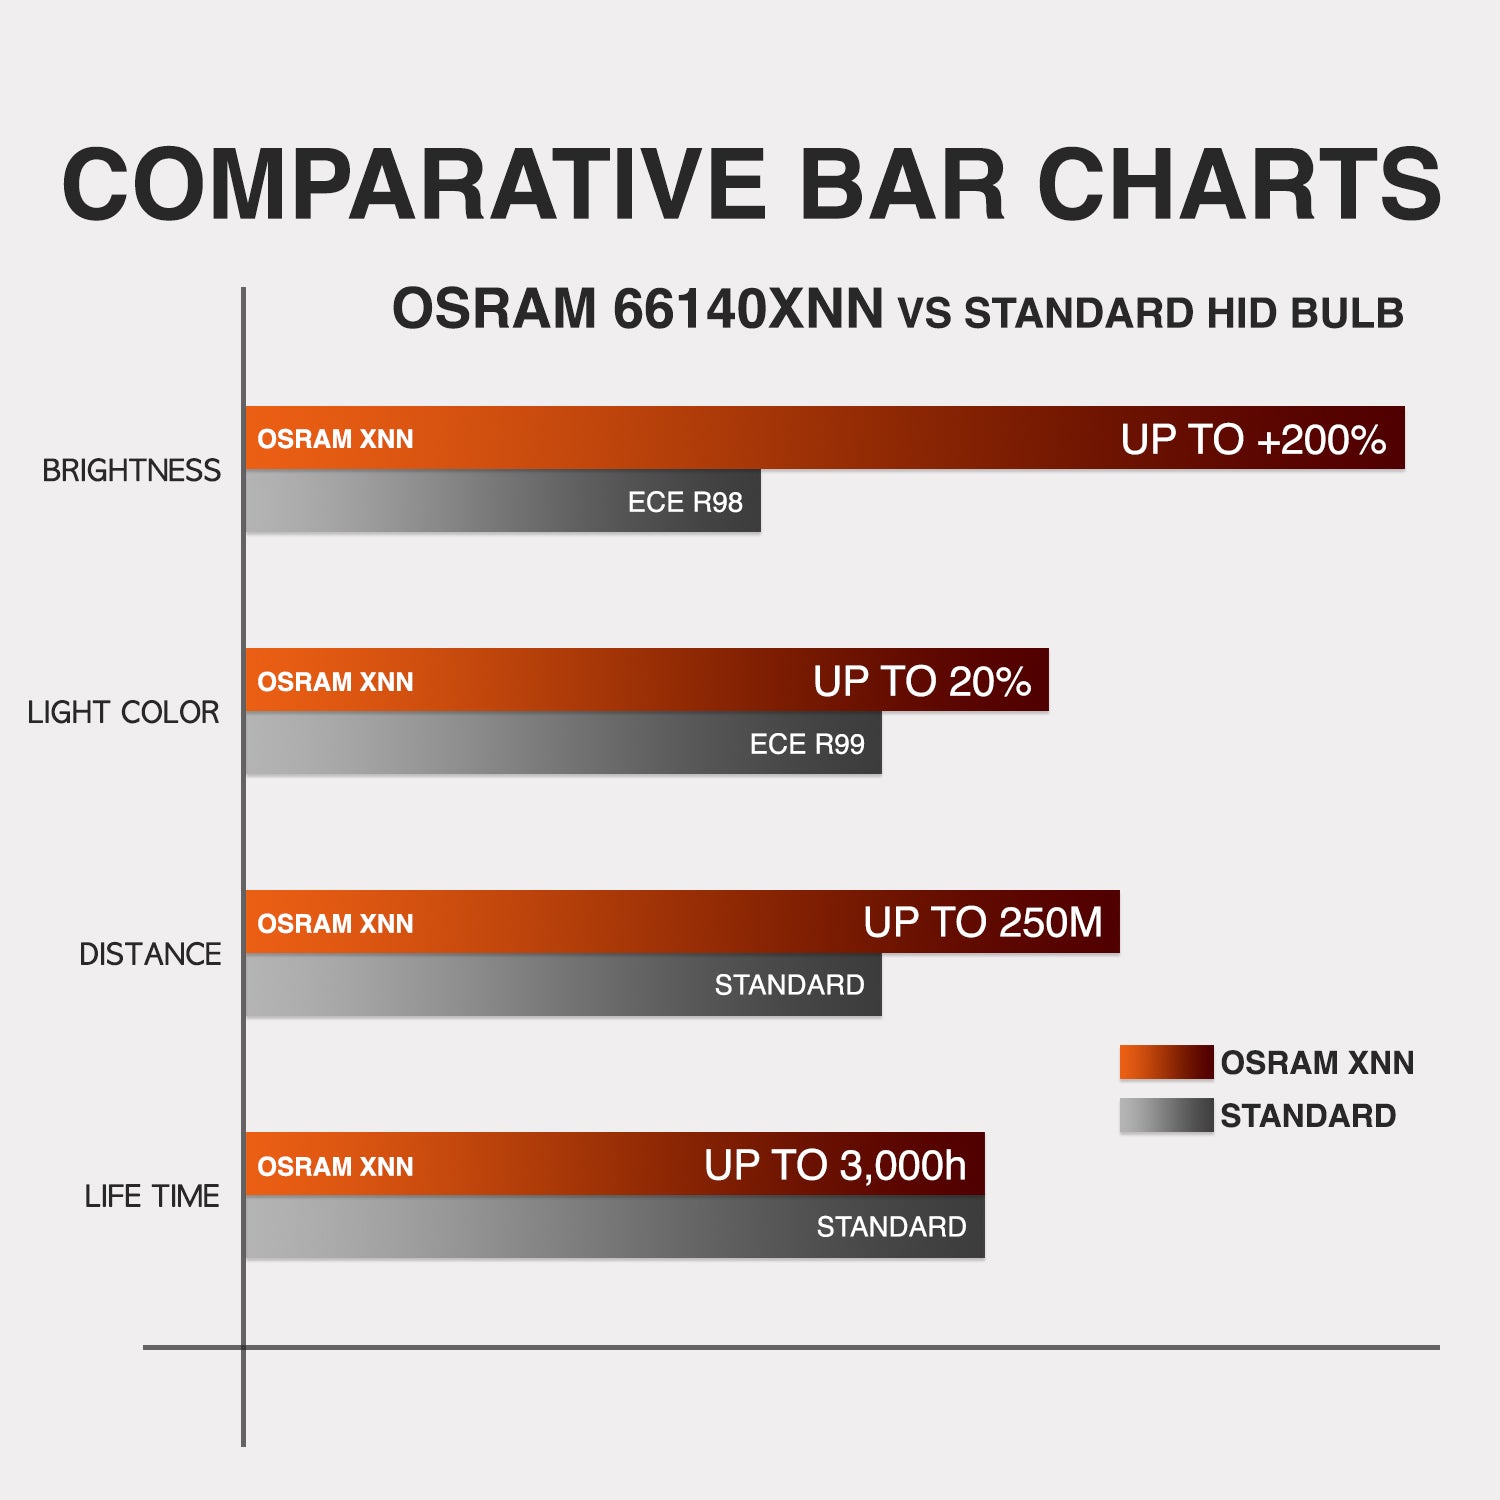 Osram D1S Xenarc Night Breaker LASER + 220% Xenon-bulb - 1 stk